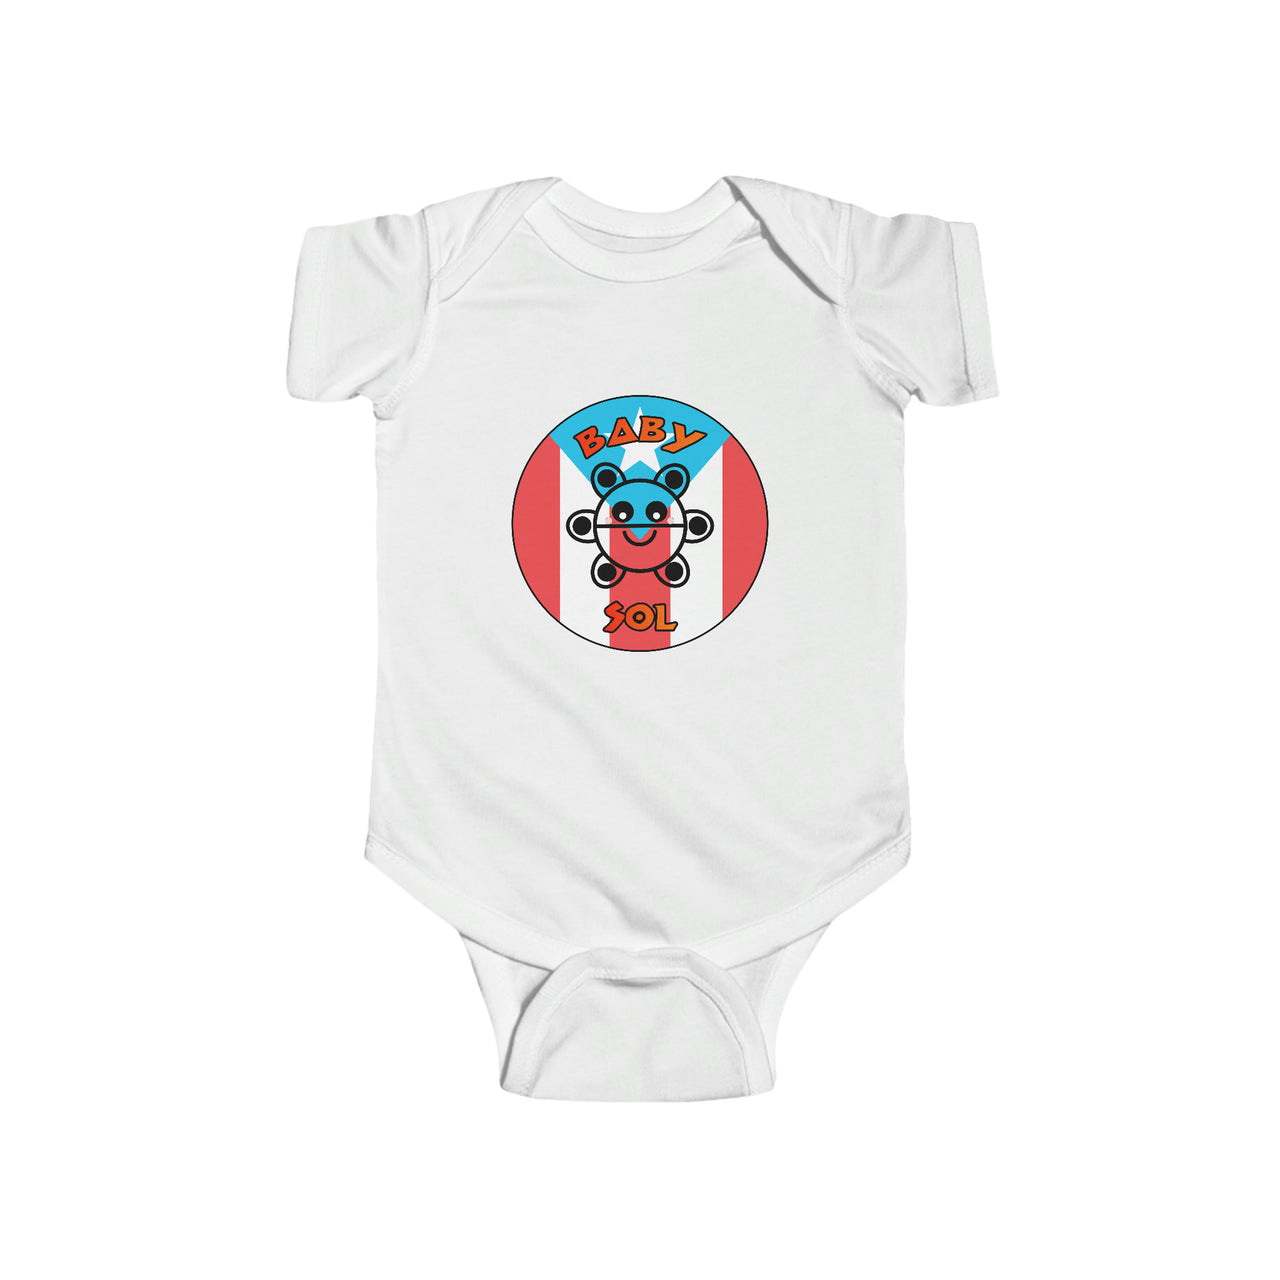 Baby Sol - Infant Fine Jersey Bodysuit